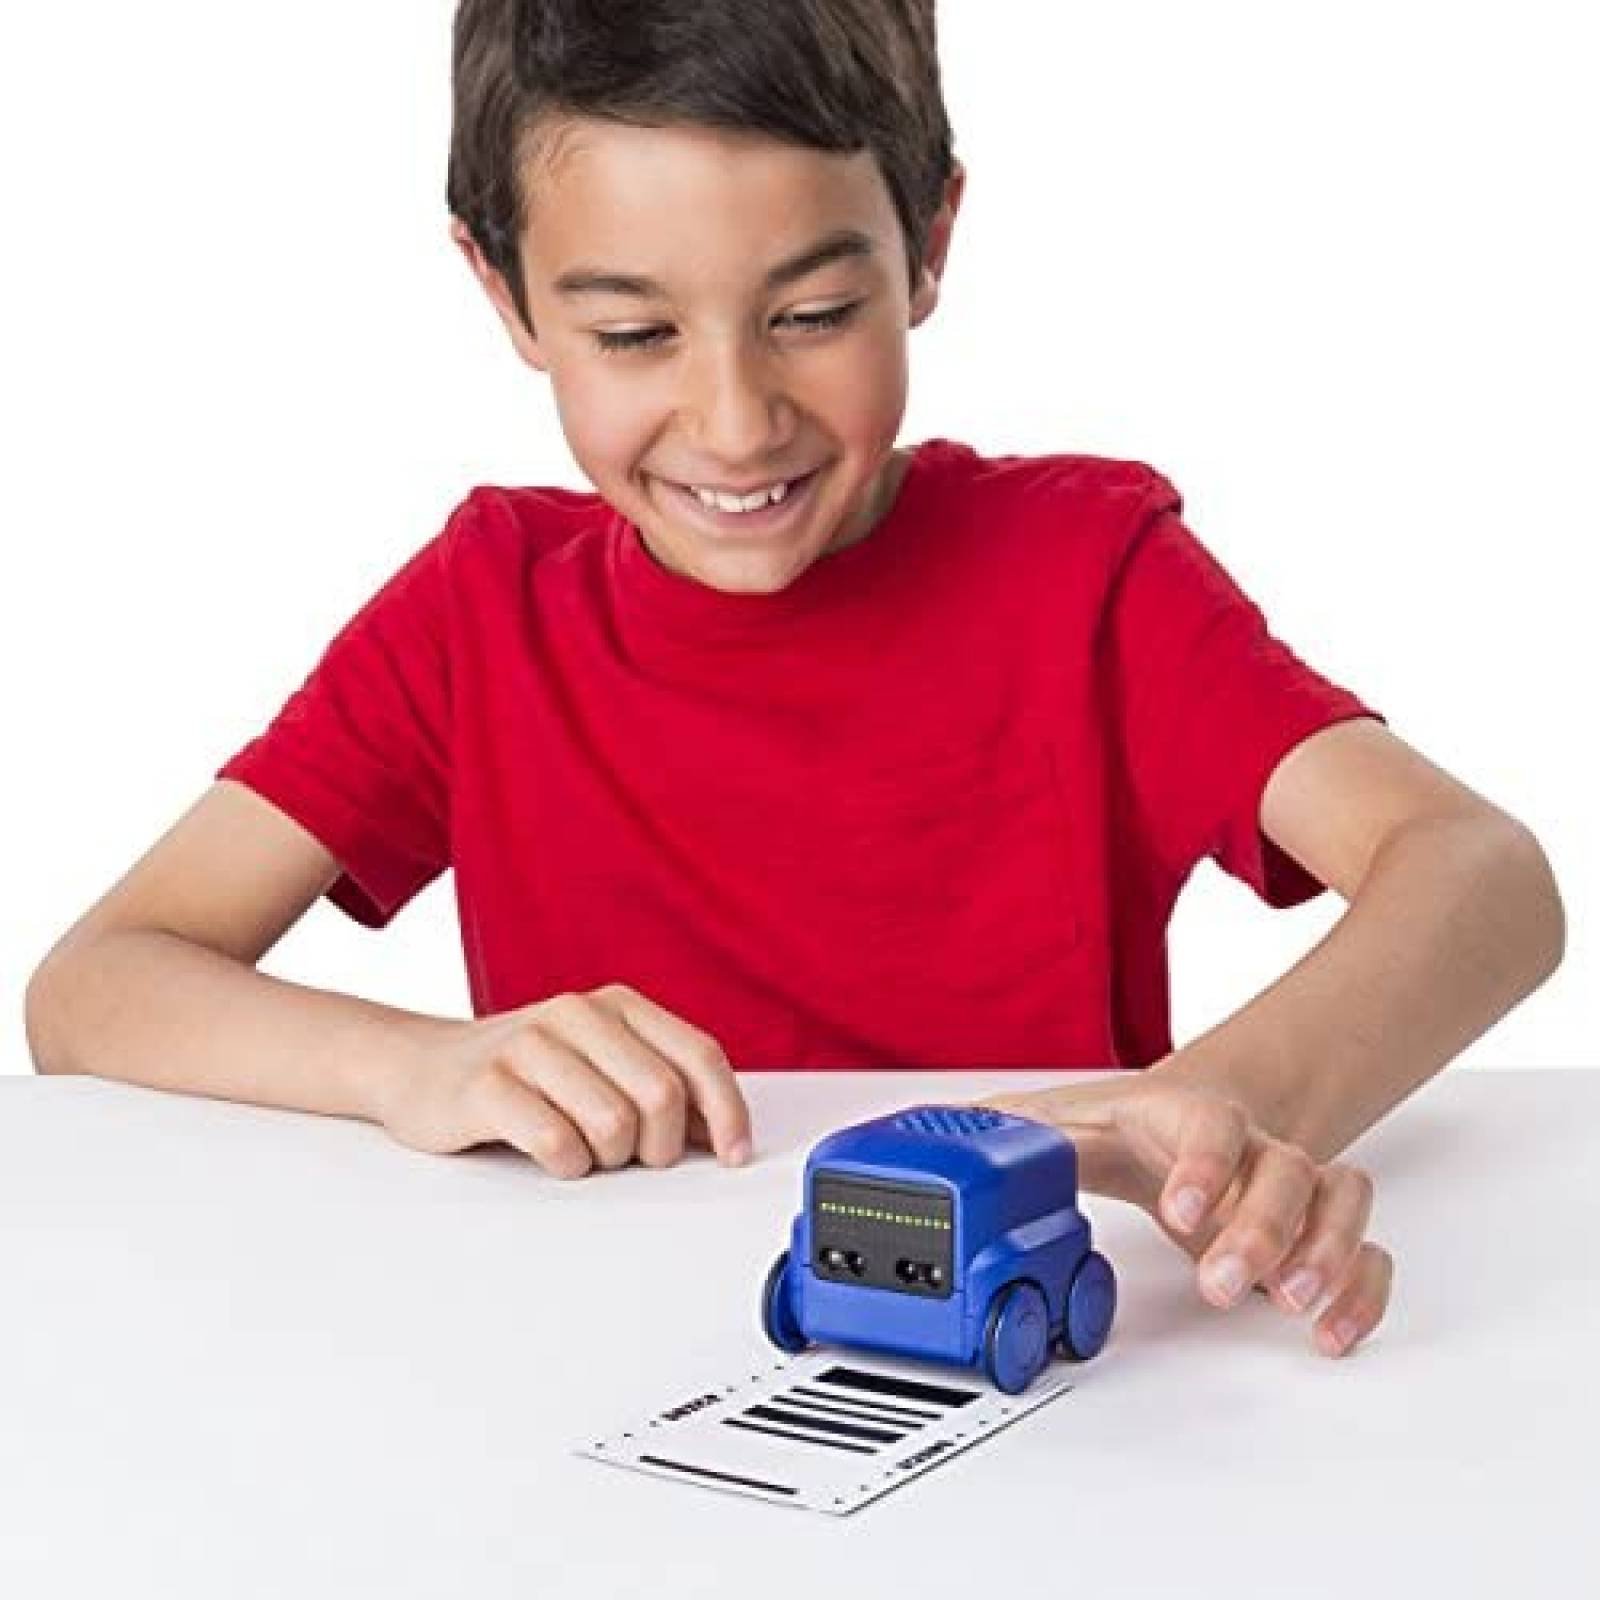 Robot de Juguete Boxer con Control Remoto para Niños -Azul